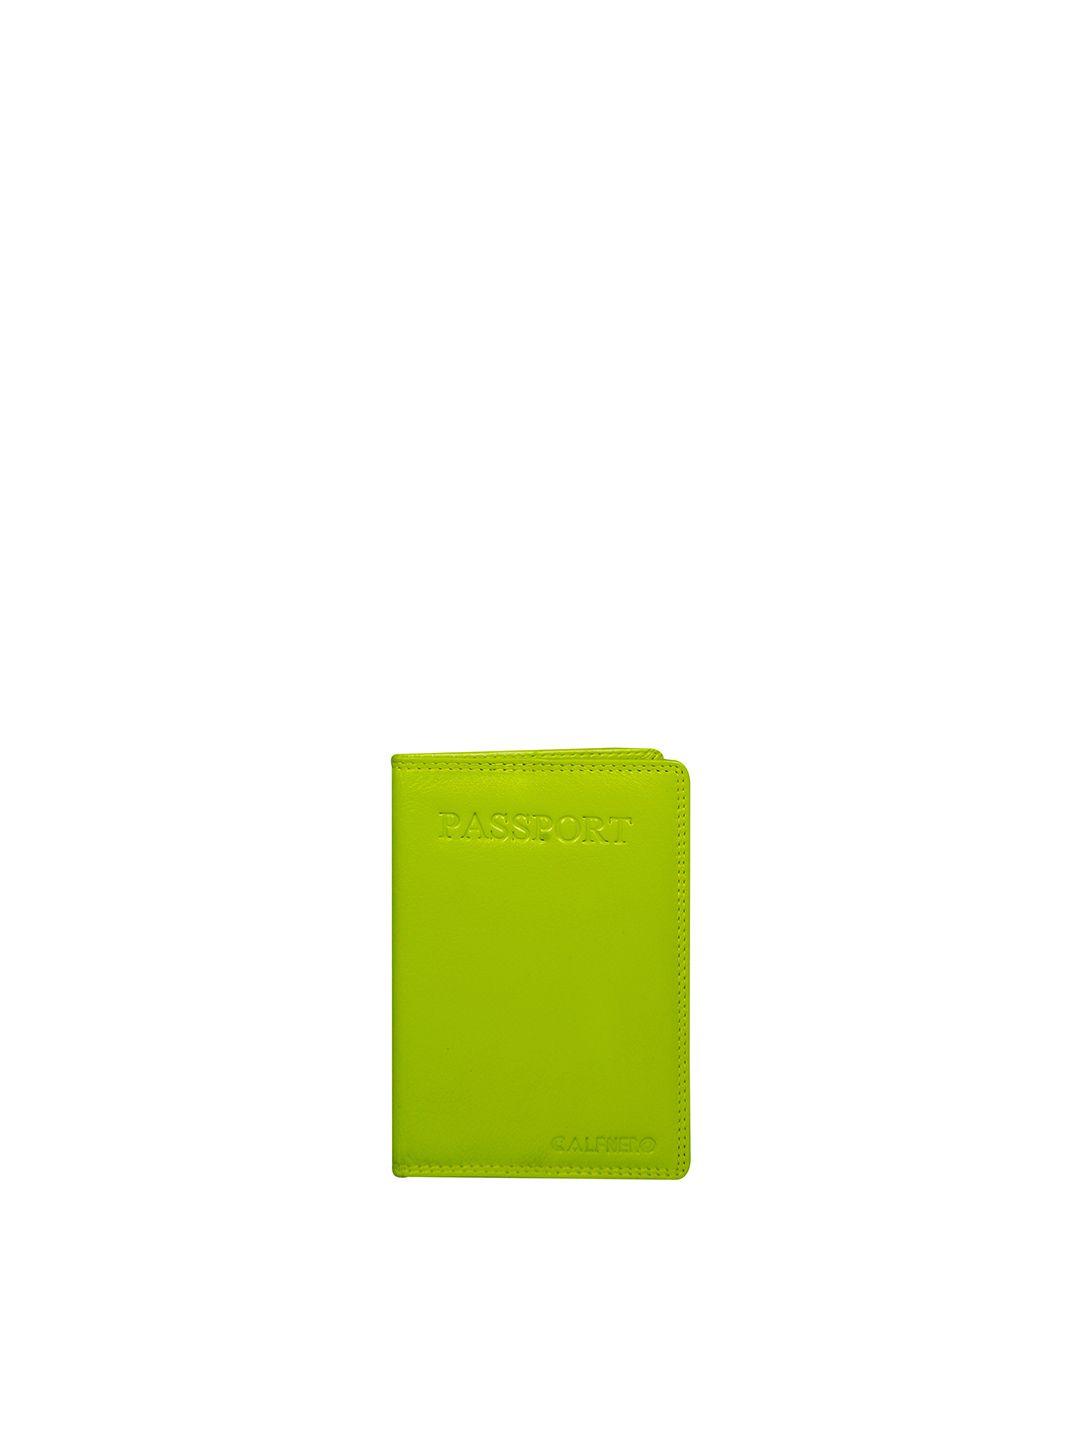 calfnero green leather passport holder with passport holder